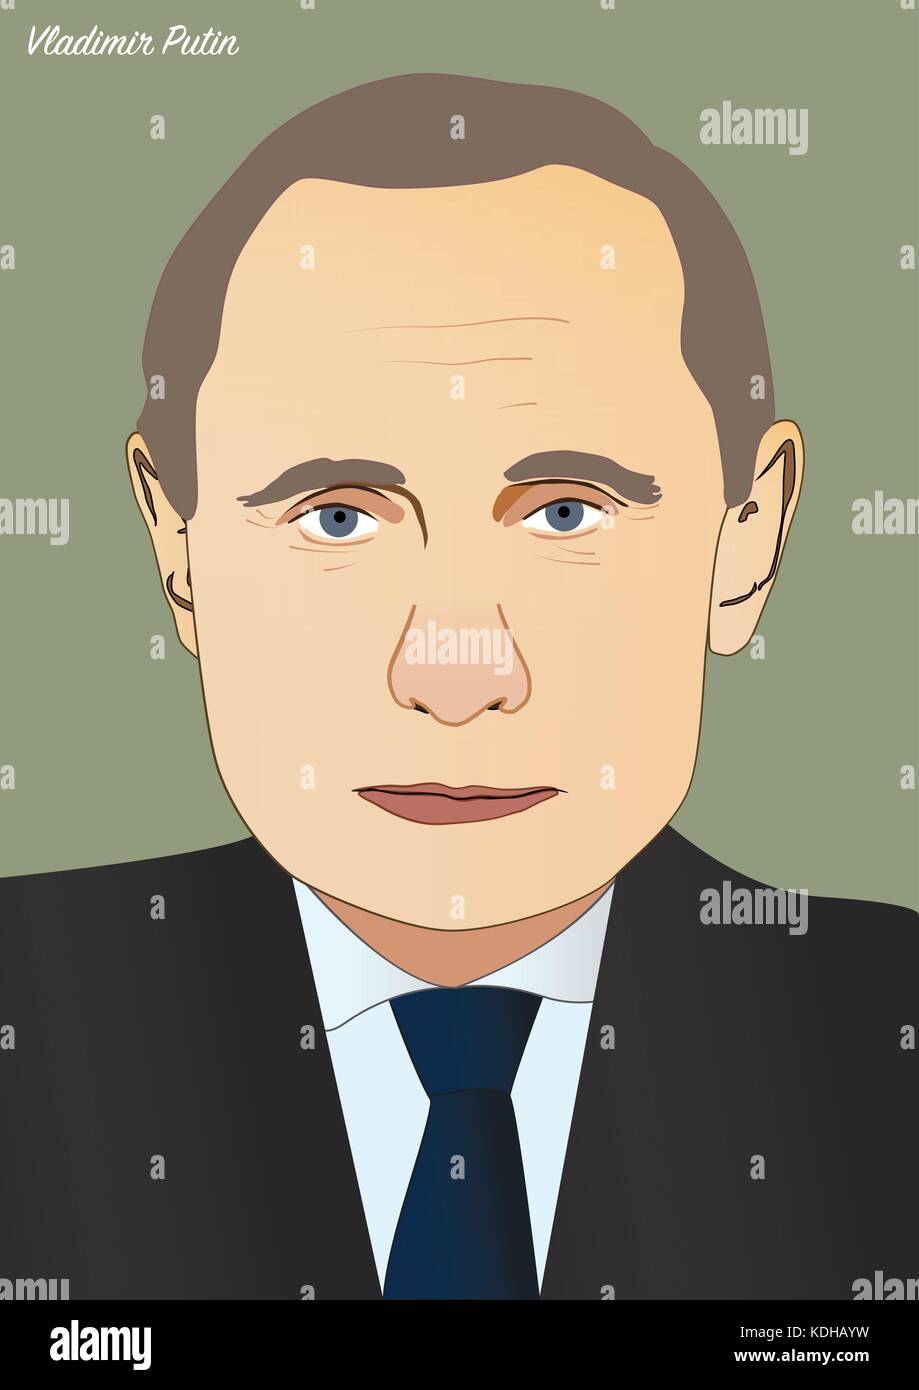 Kiev/Ukraine - October 14, 2017: Vector portrait of Vladimir Putin, President of the Russian Federation Stock Vector